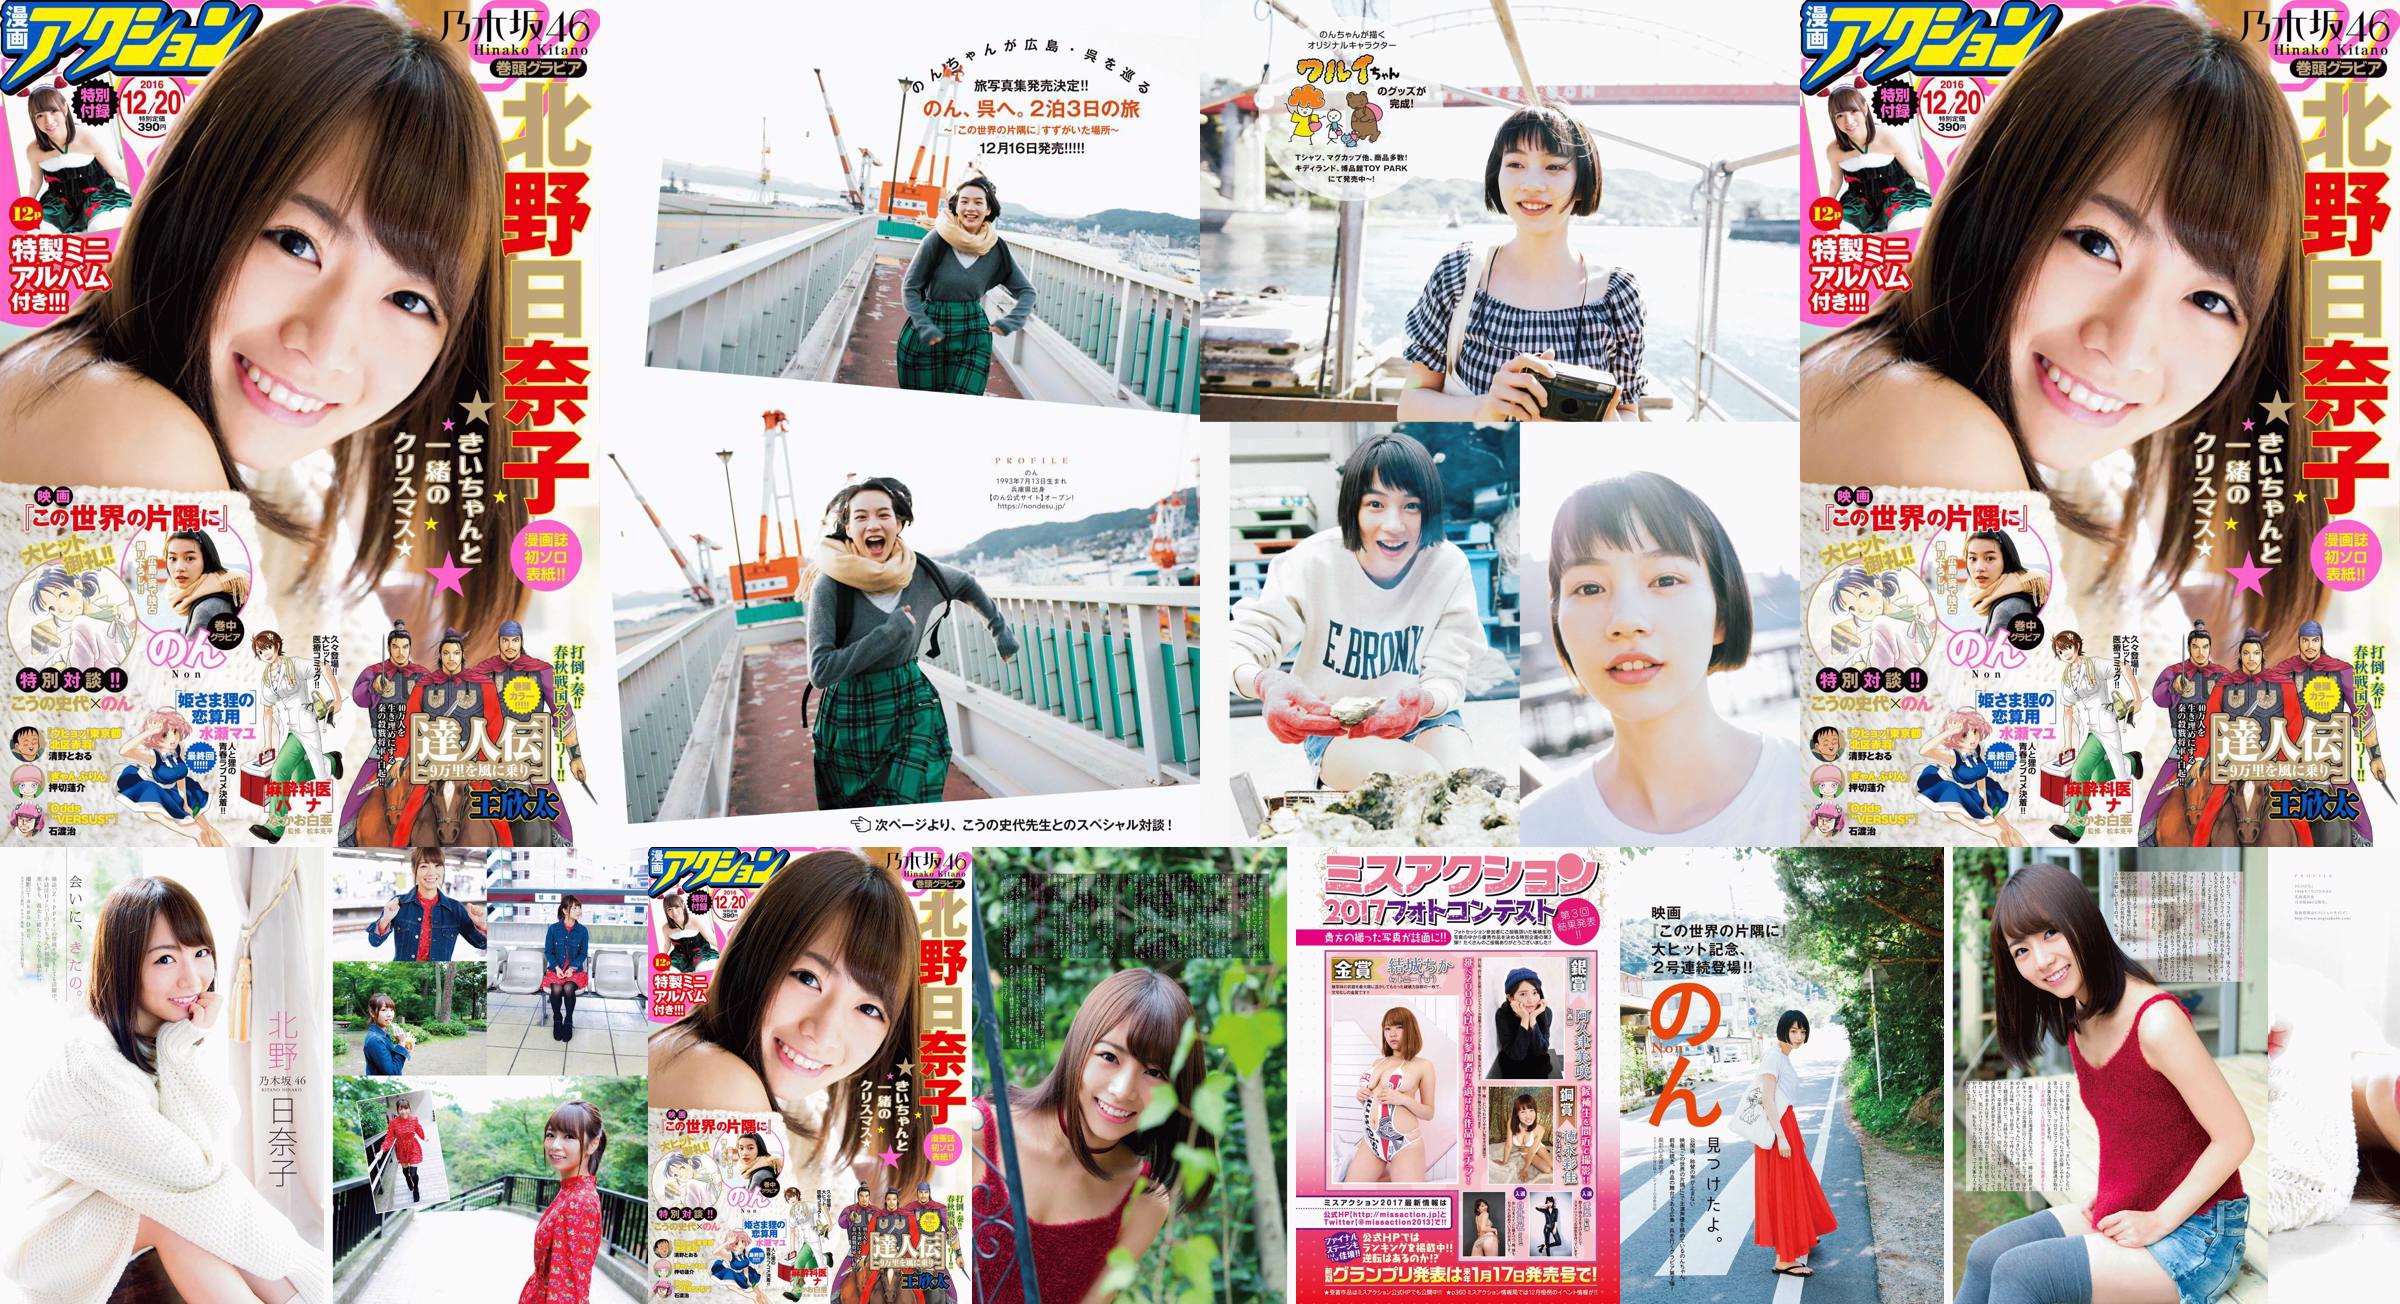 [Manga Action] Kitano Hinako のん 2016 No.24 Photo Magazine No.fee82d Page 3